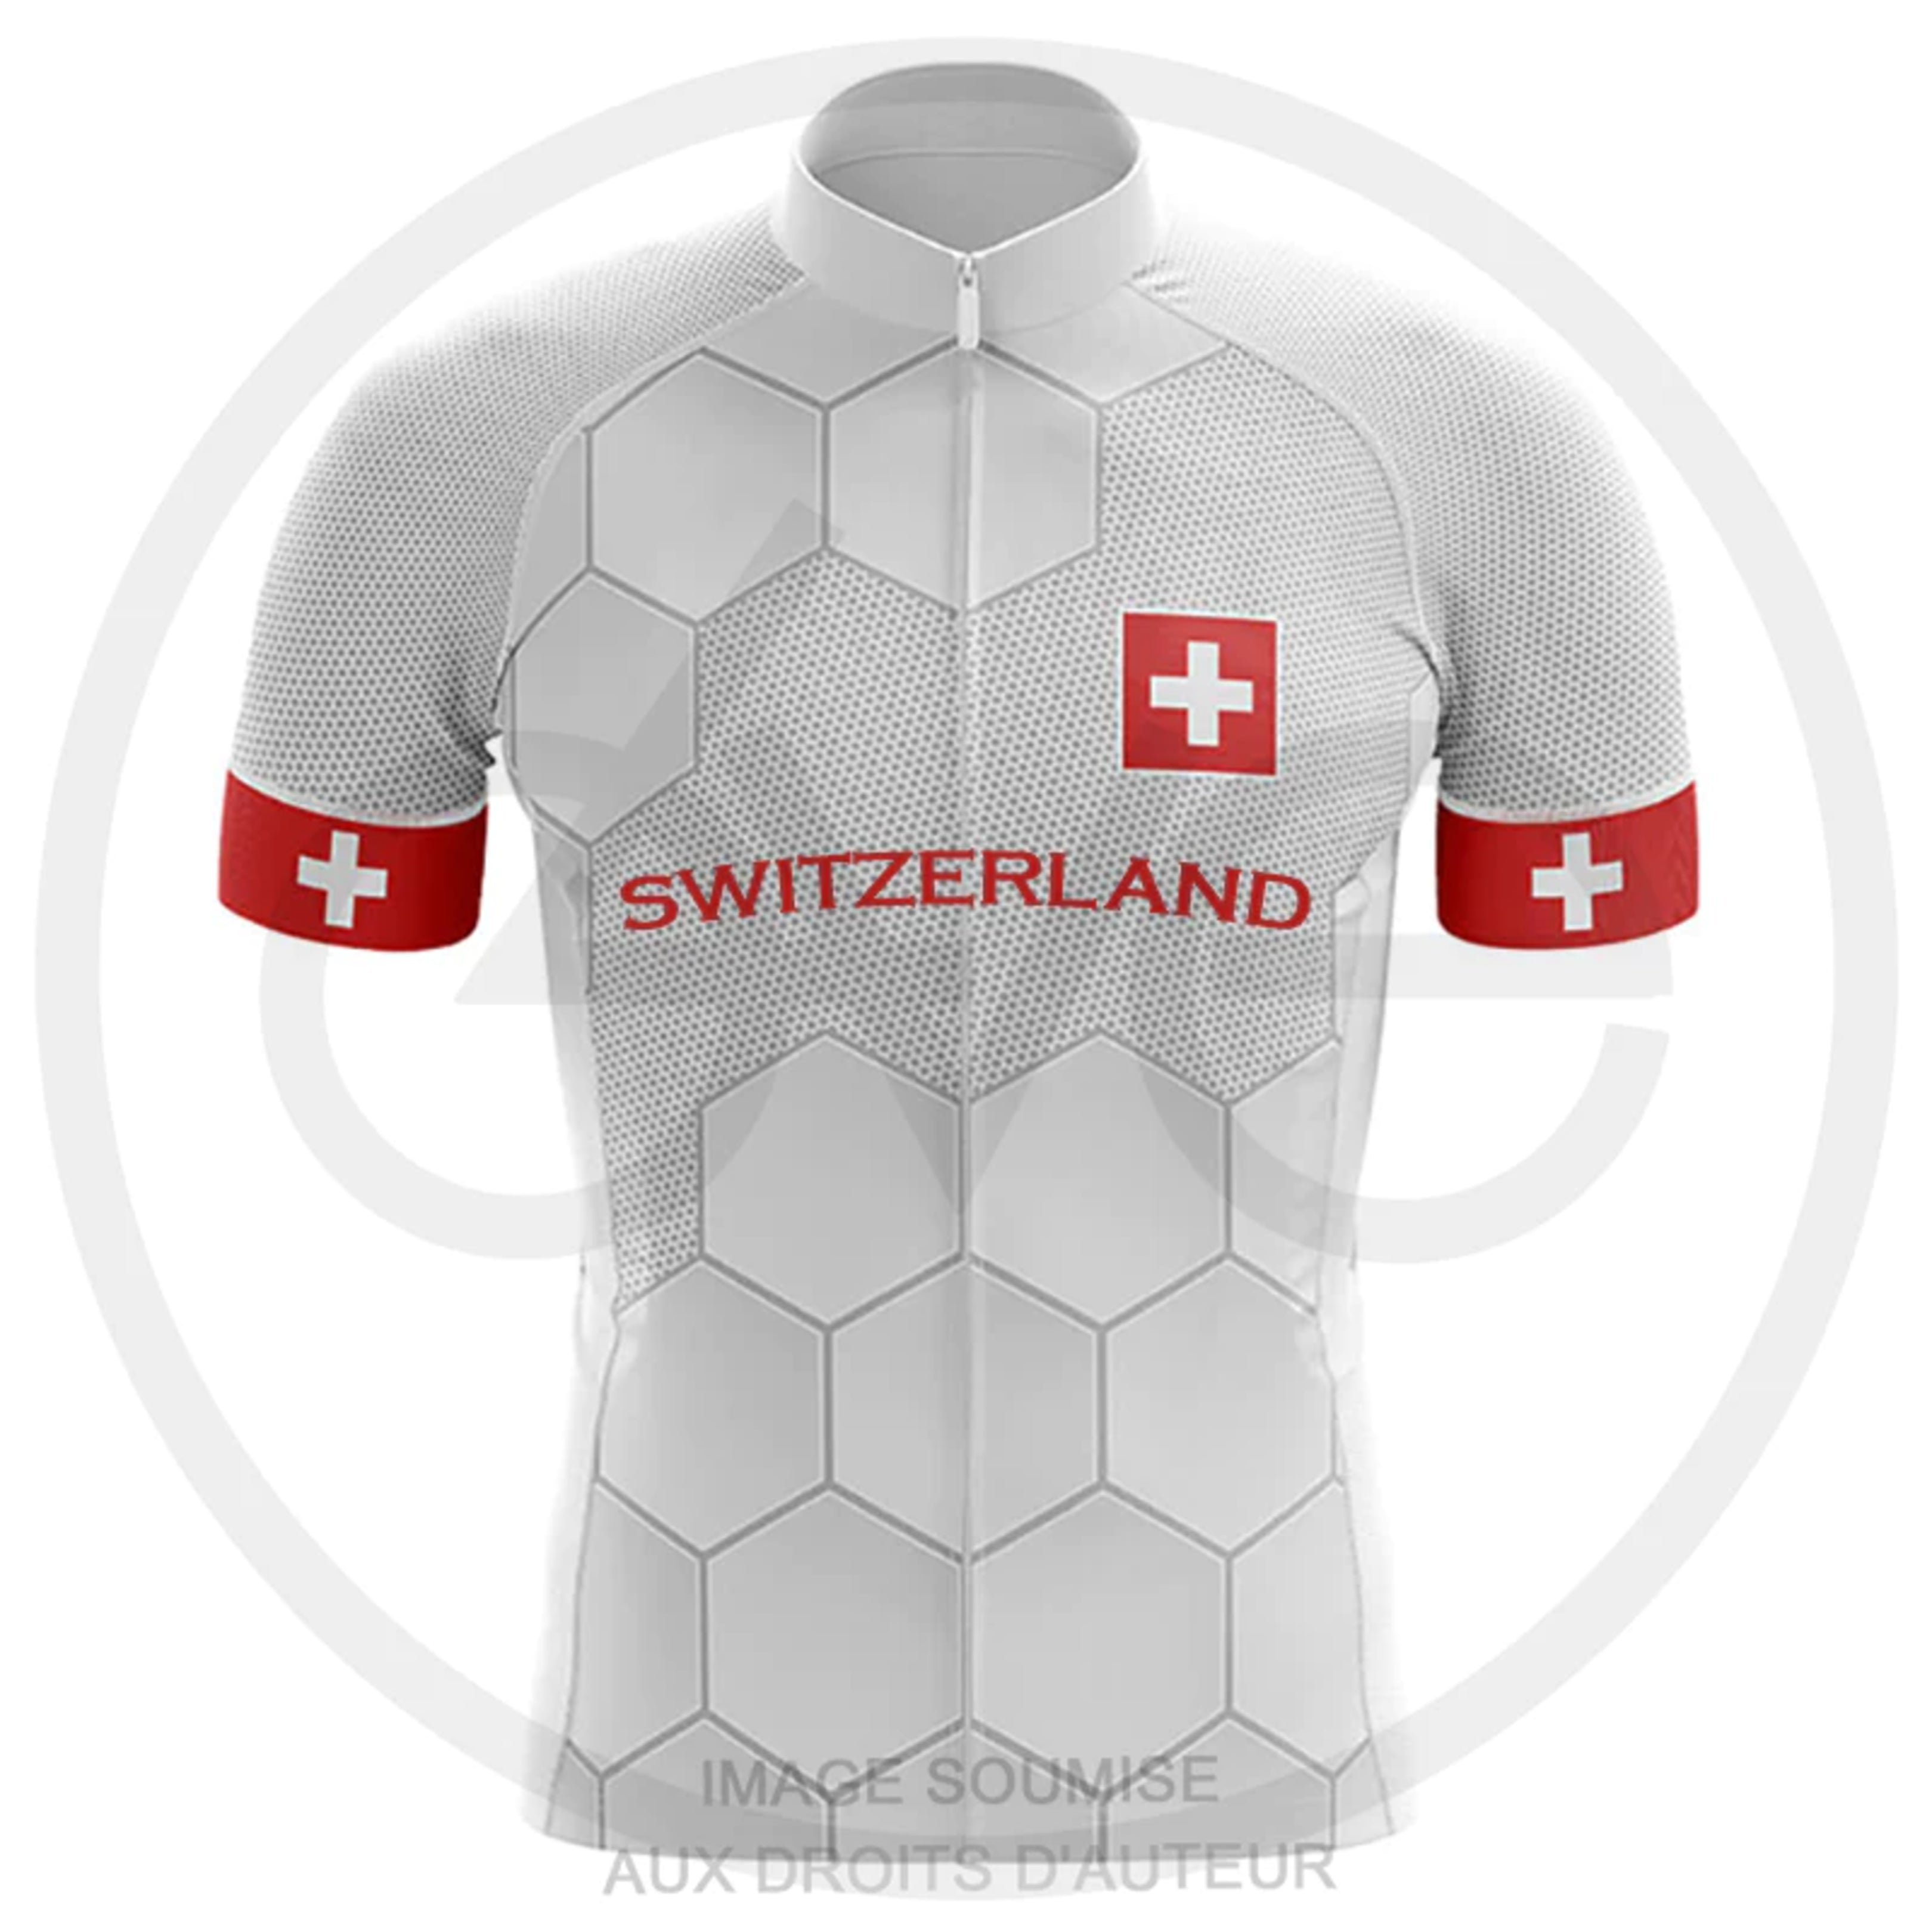 Maillot Design "SWITZERLAND - SUISSE" Blanc